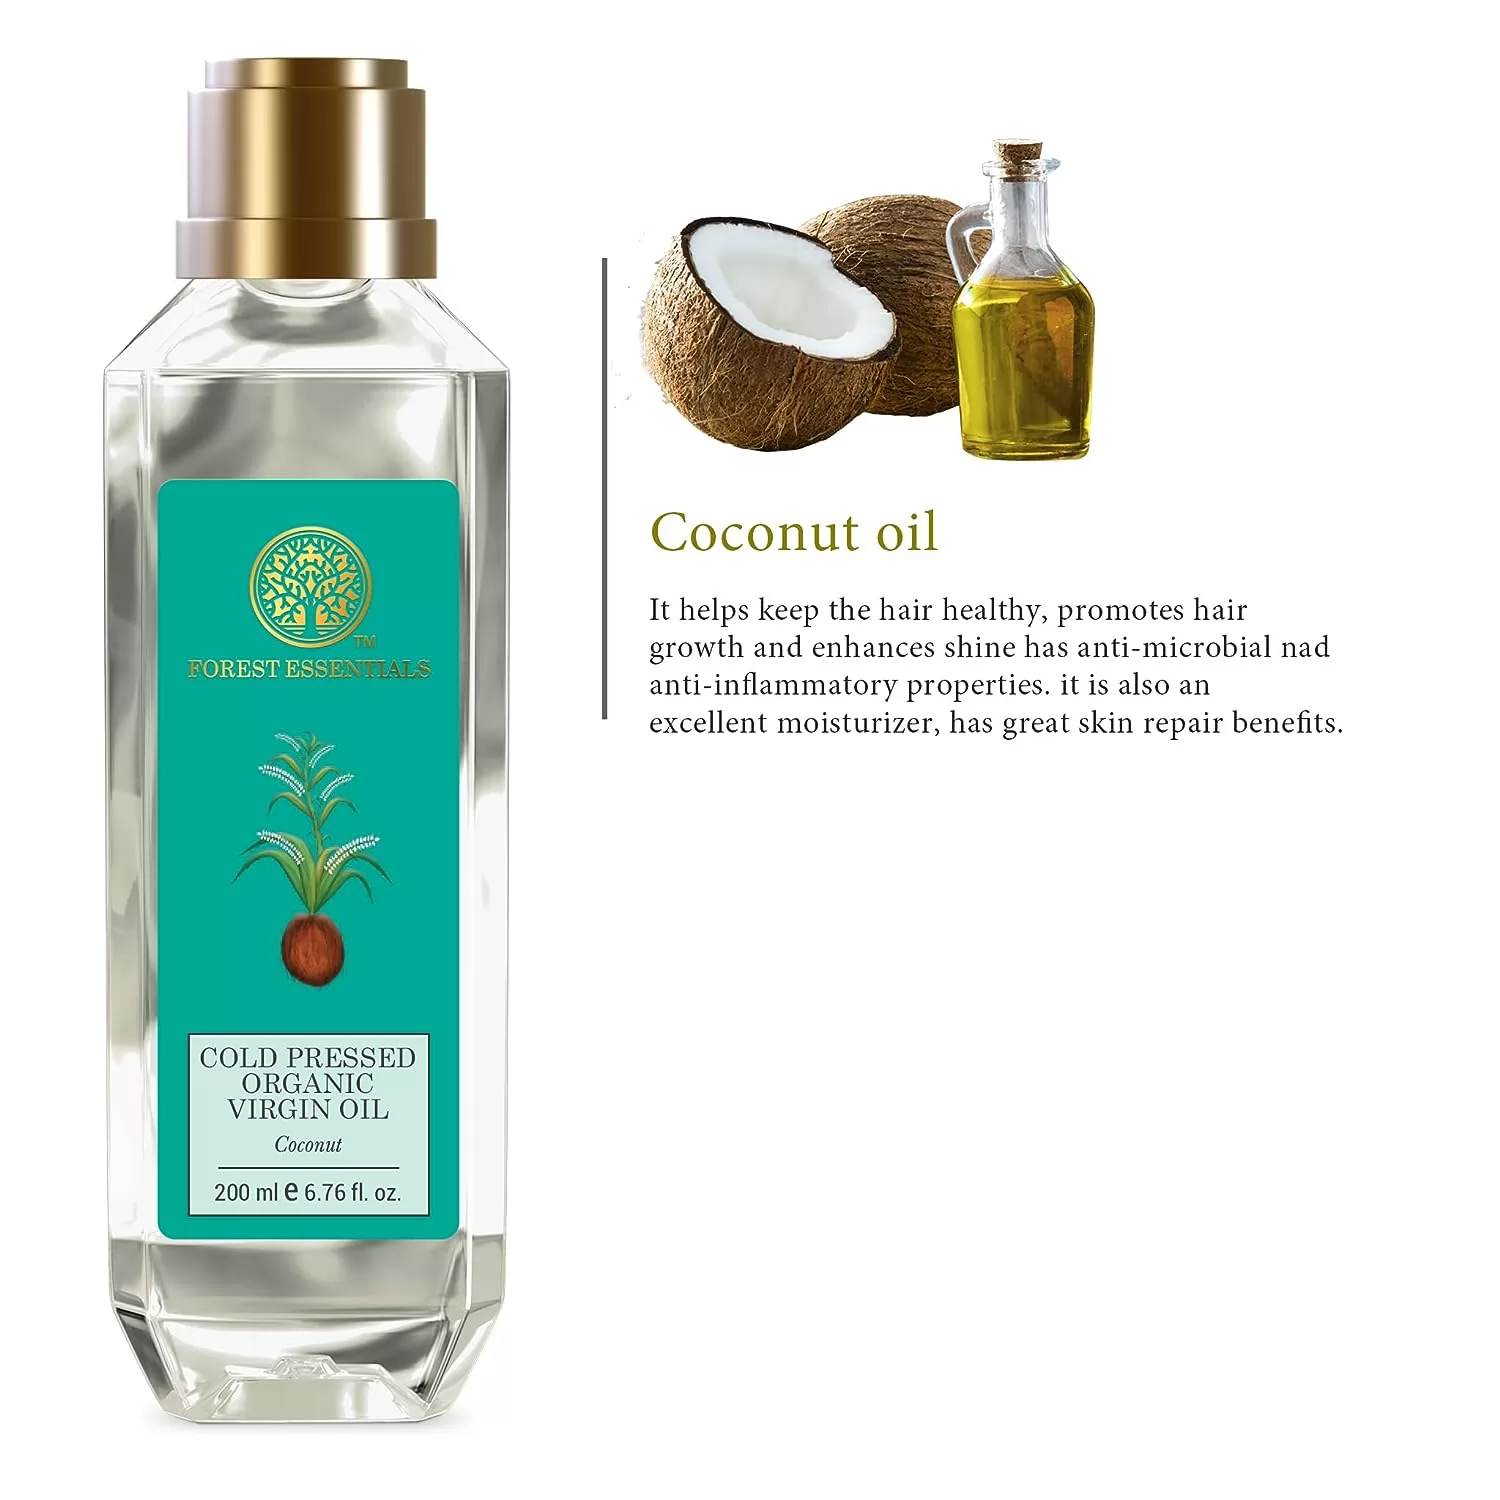  Forest Essentials Organic Cold Pressed Virgin Oil Coconut